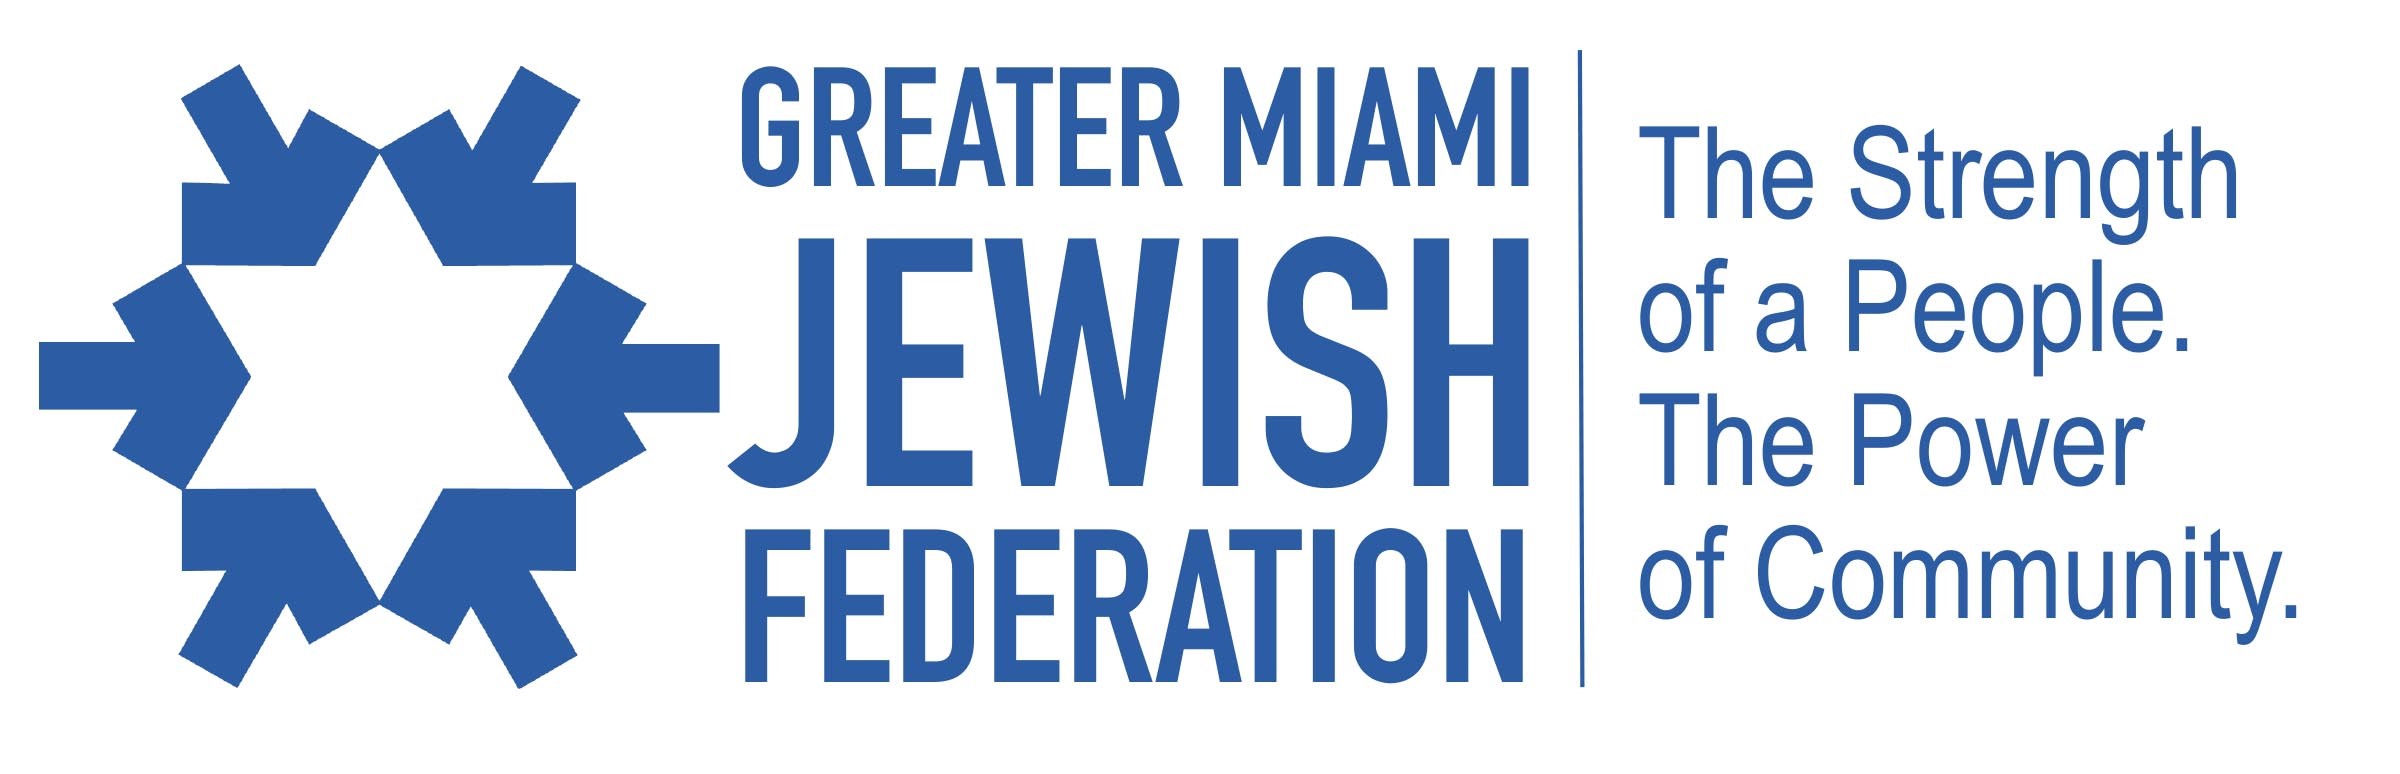 Greater Miami Jewish Federation - logo